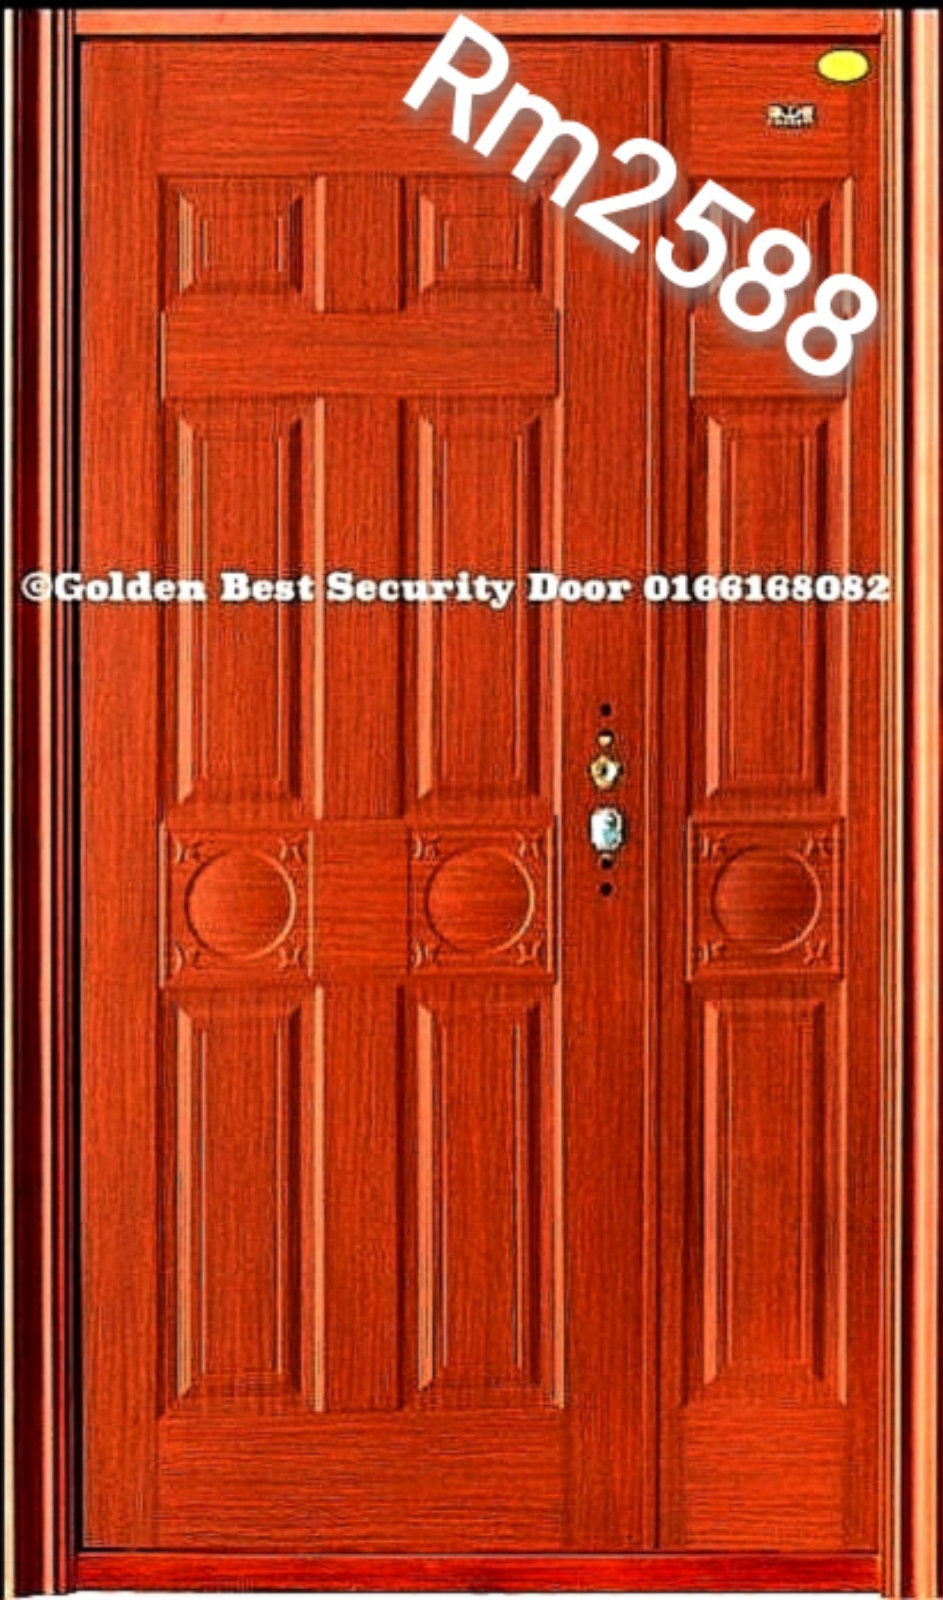 Promotion Offer 5ft x 7ft Security Door